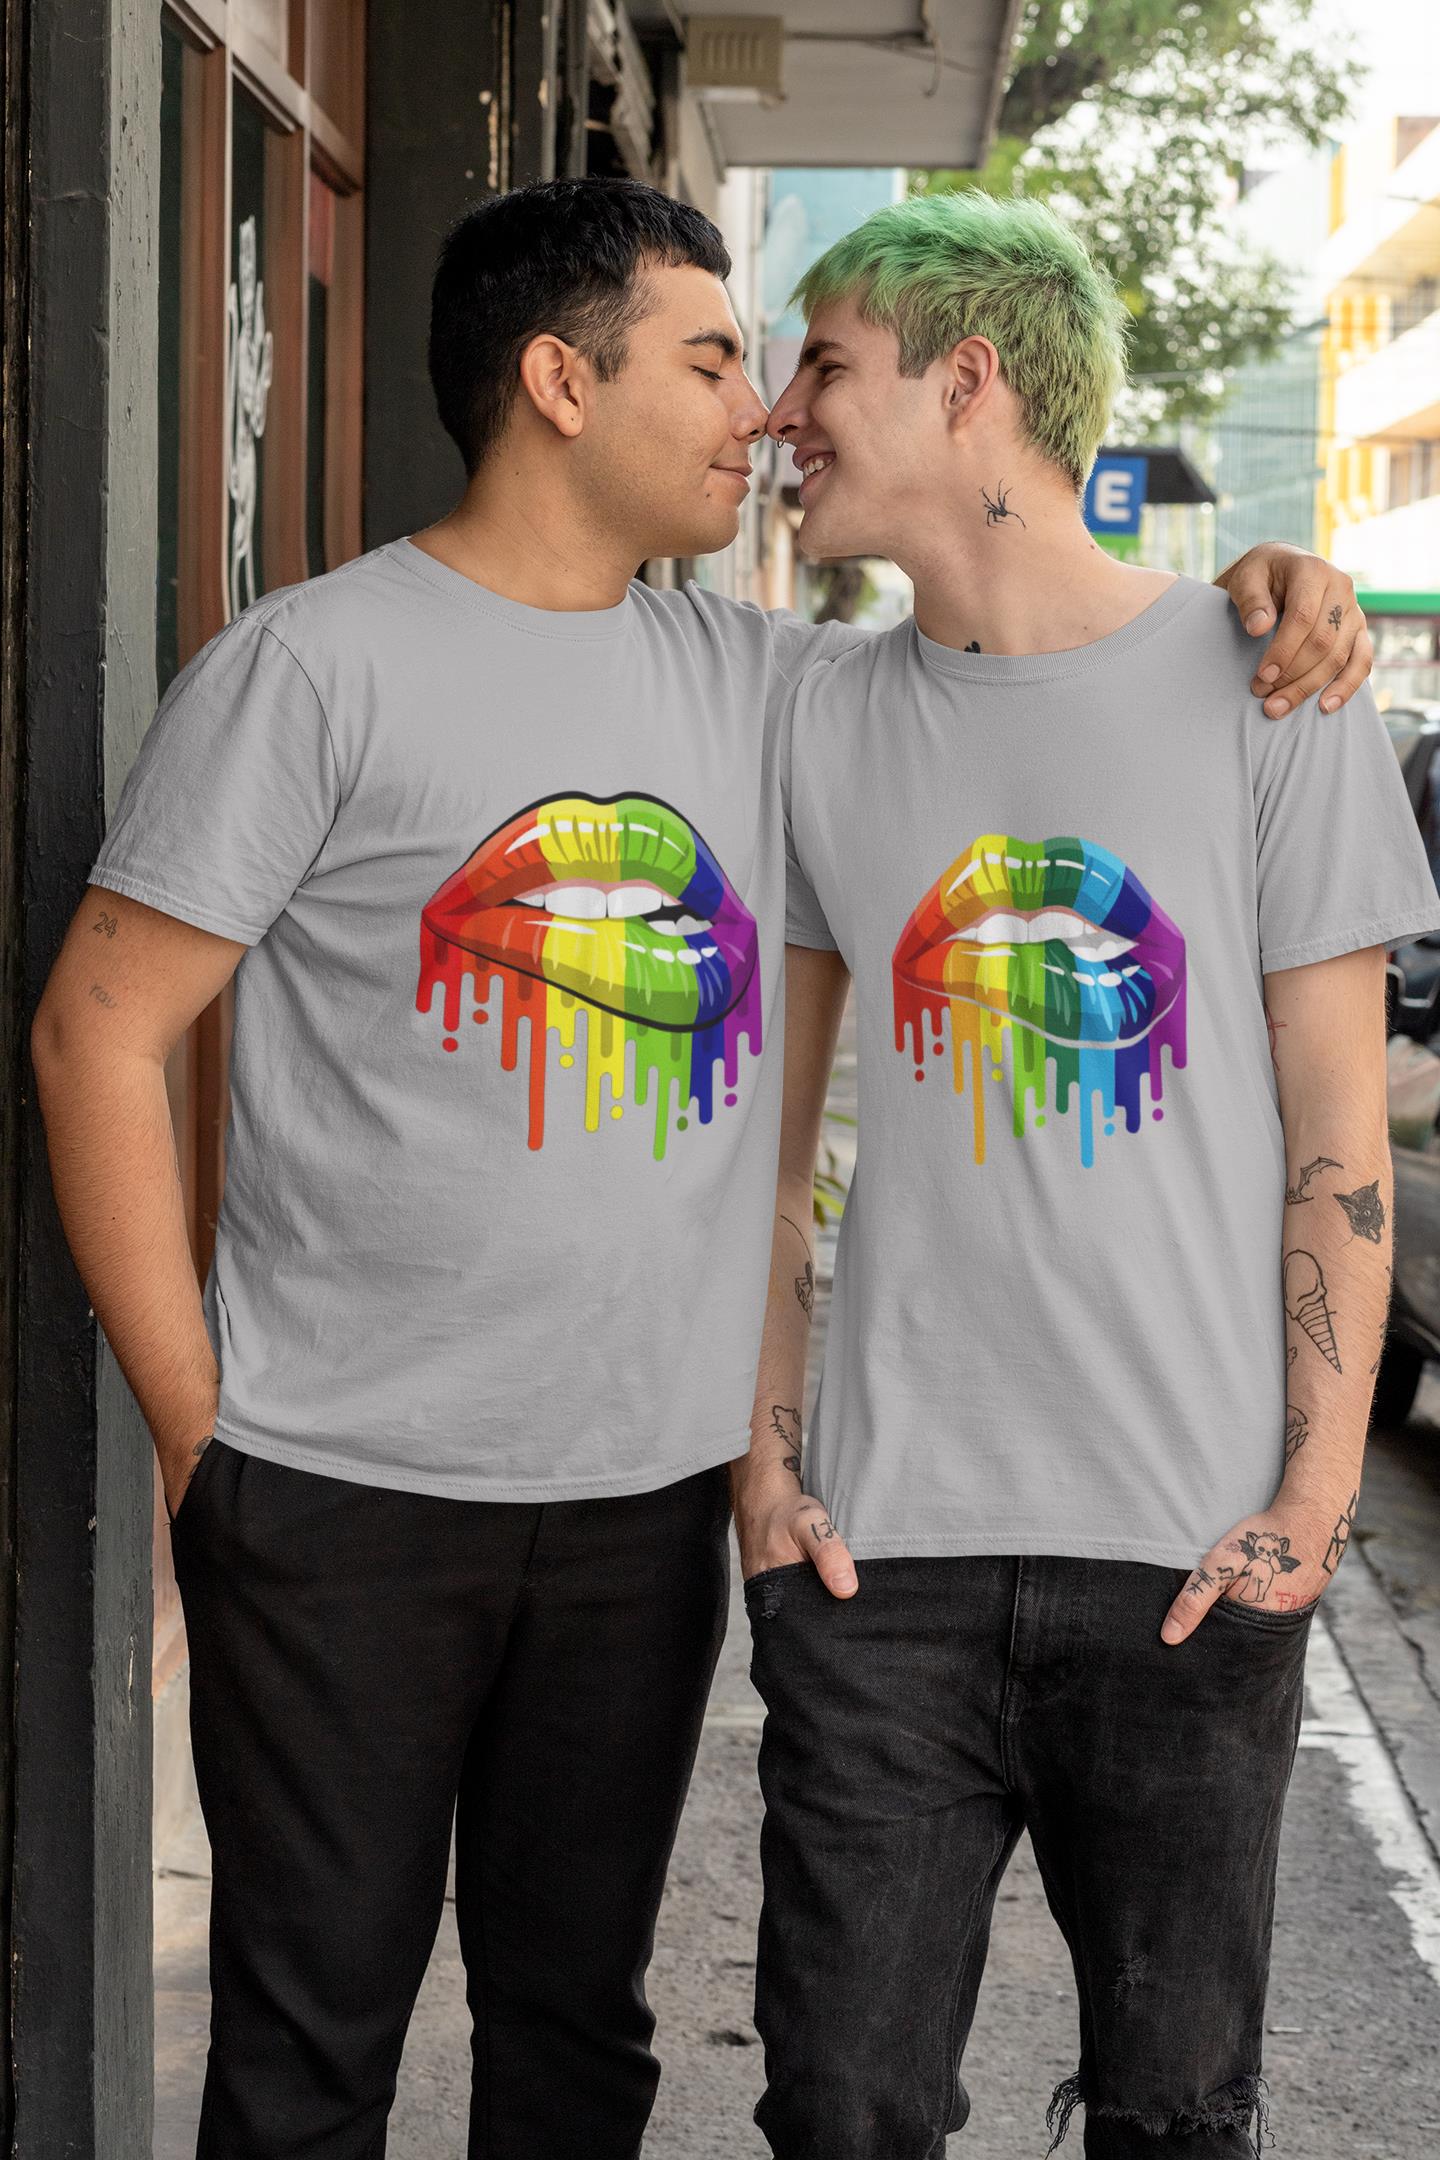 LGBT Rainbow Shirt Lips T-Shirt For Matching Couple